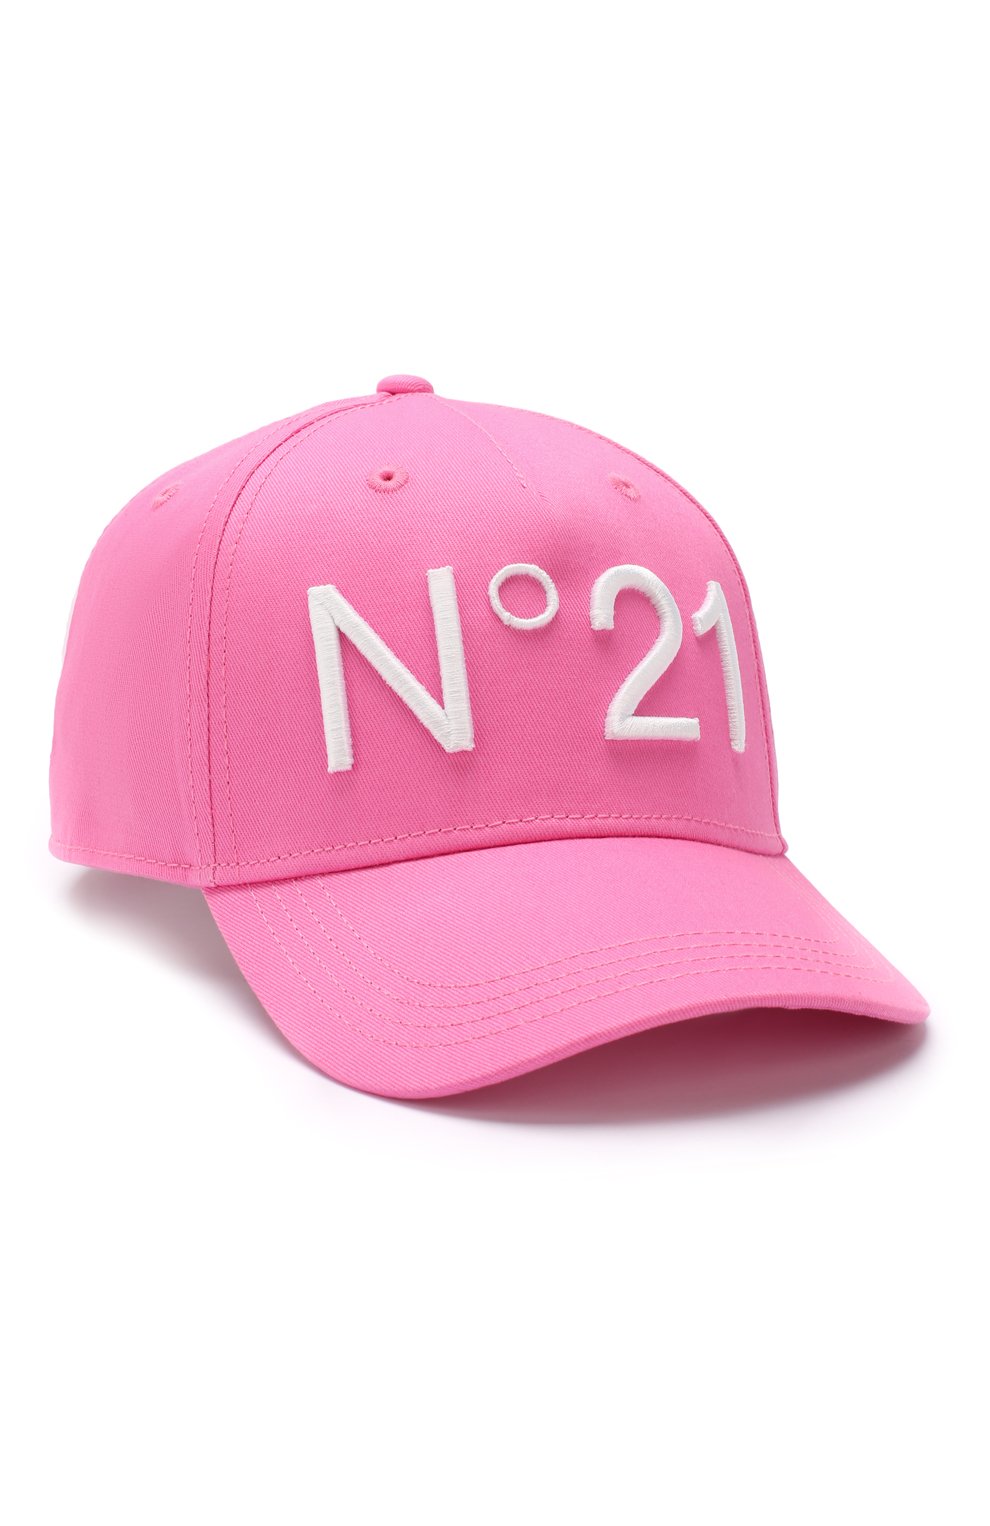 Детская хлопковая бейсболка N21 розового цвета, арт. N2143F/N0041/N21F1U | Фото 1 (Материал: Текстиль, Хлопок; Статус проверки: Проверена категория)